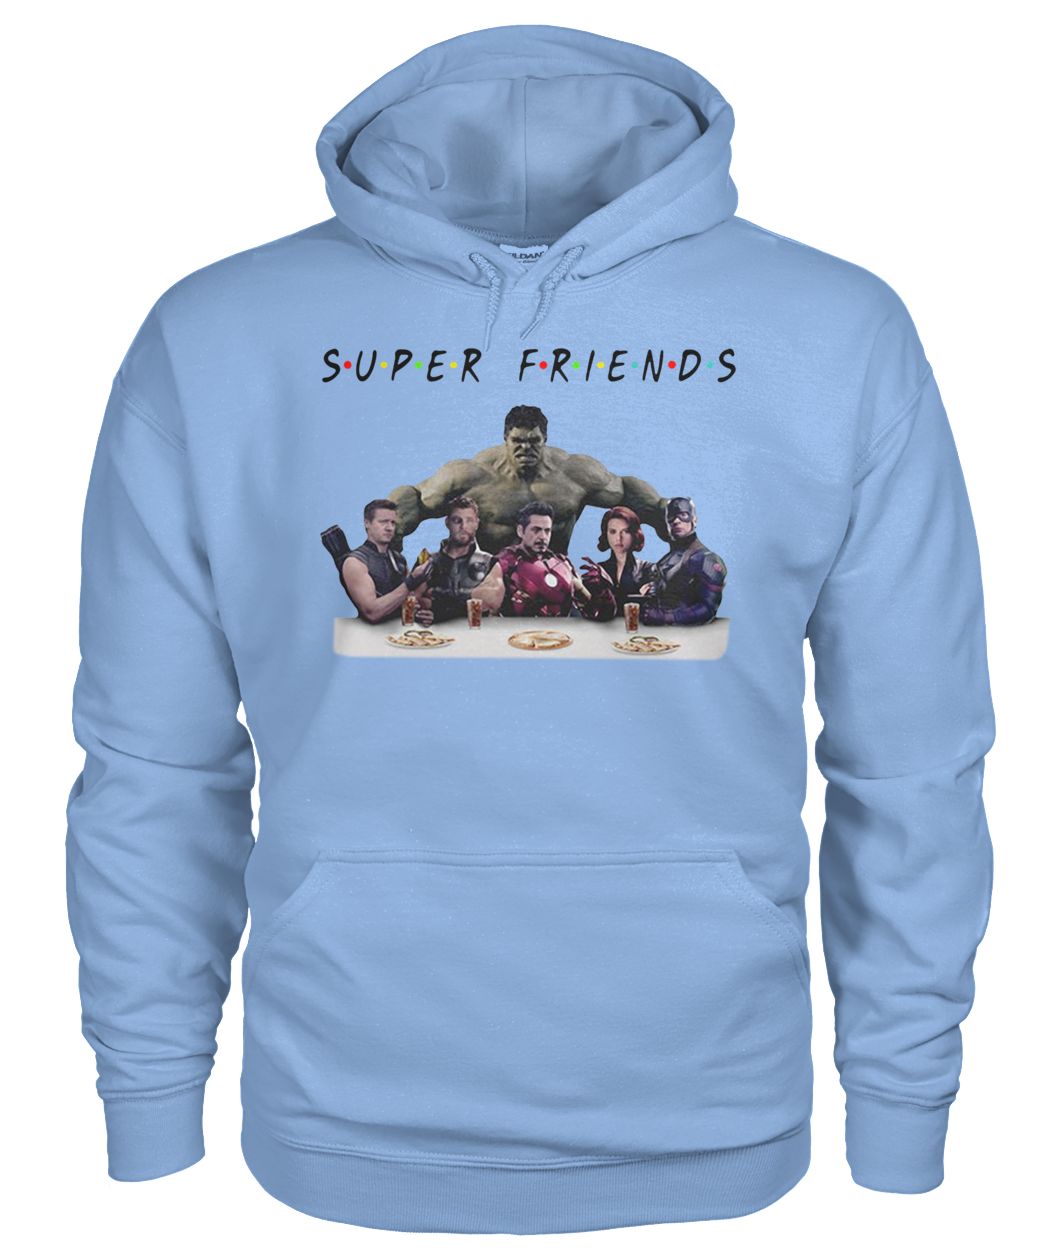 Super friends avengers endgame characters gildan hoodie